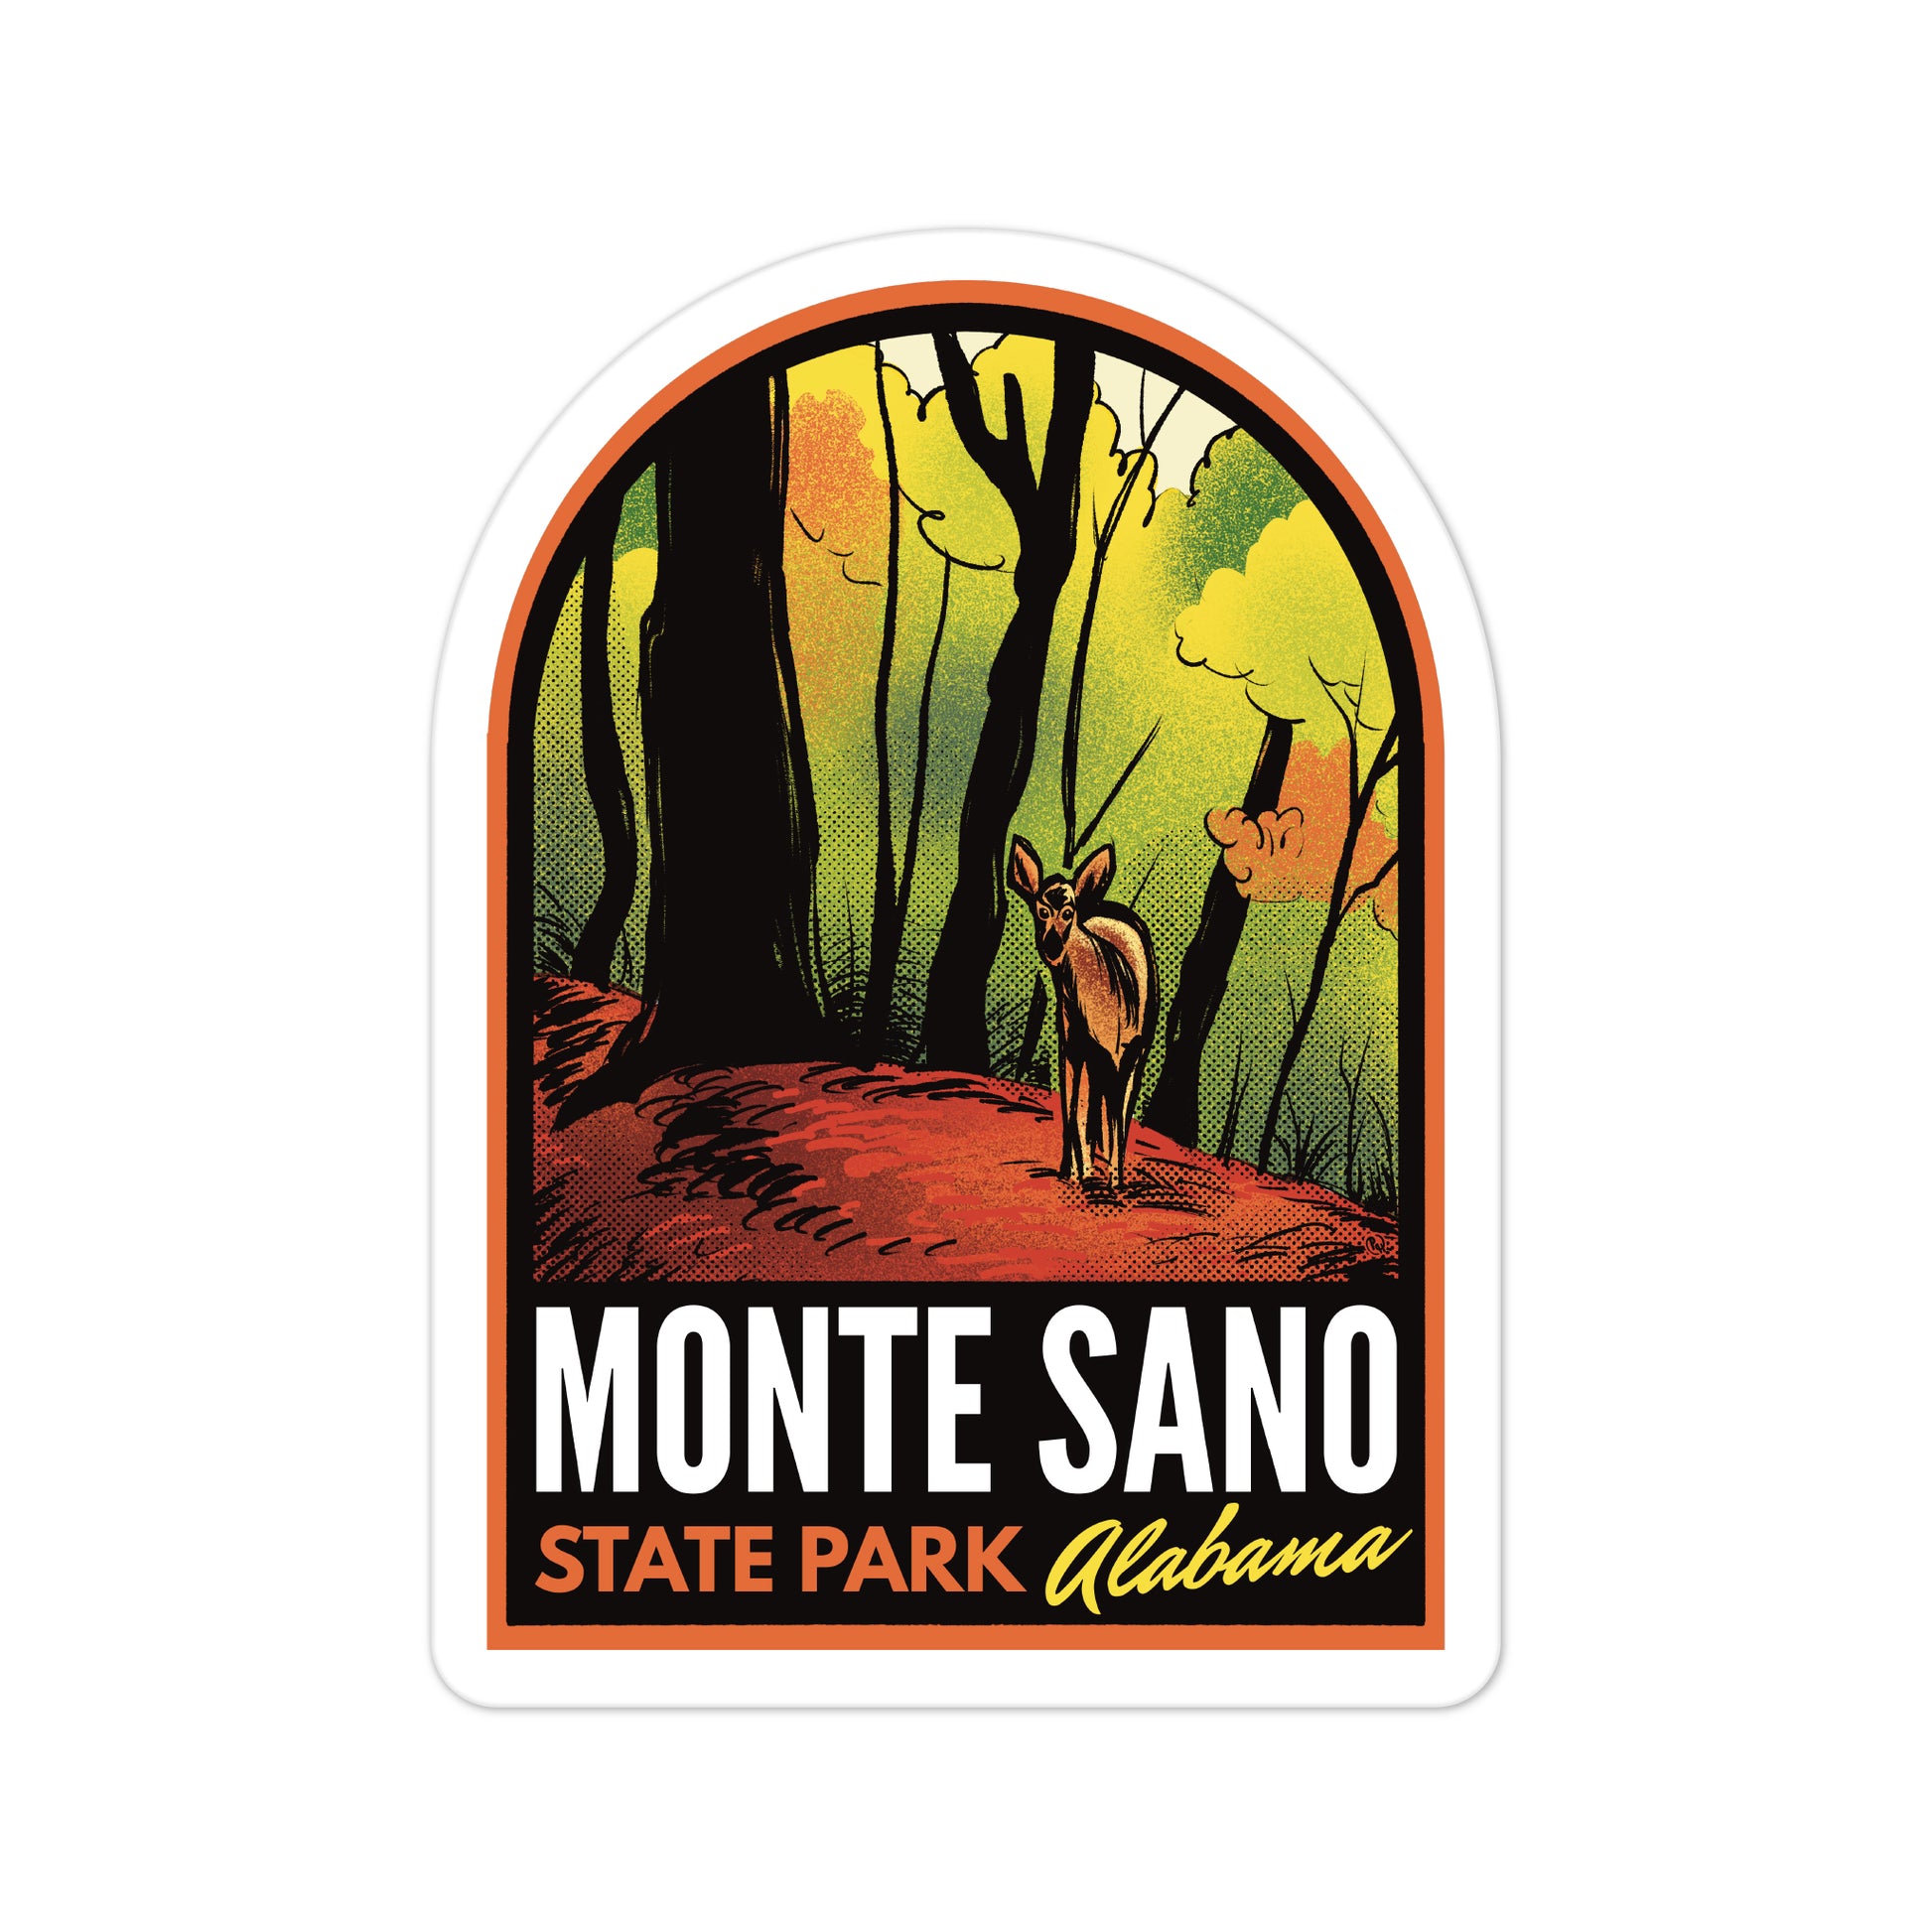 A sticker of Monte Sano State Park